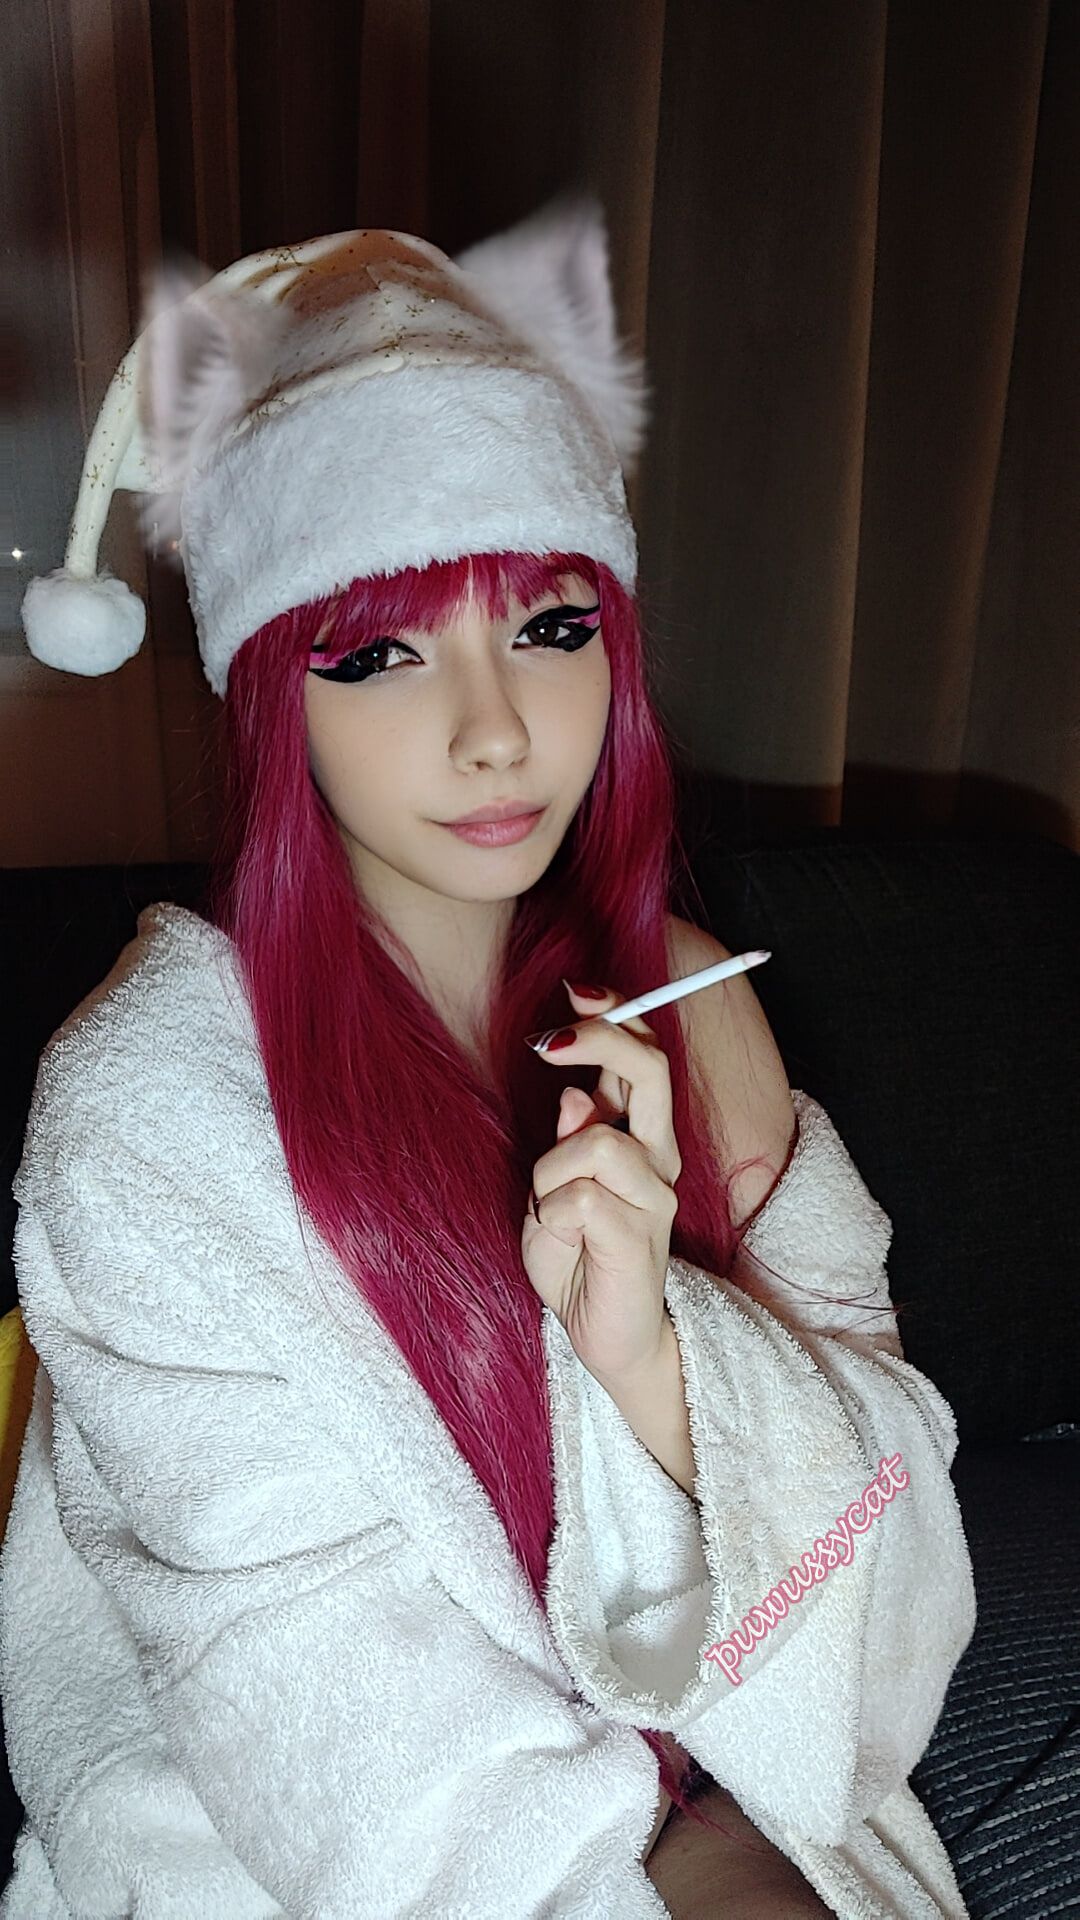 Egirl smoking in bathrobe #10